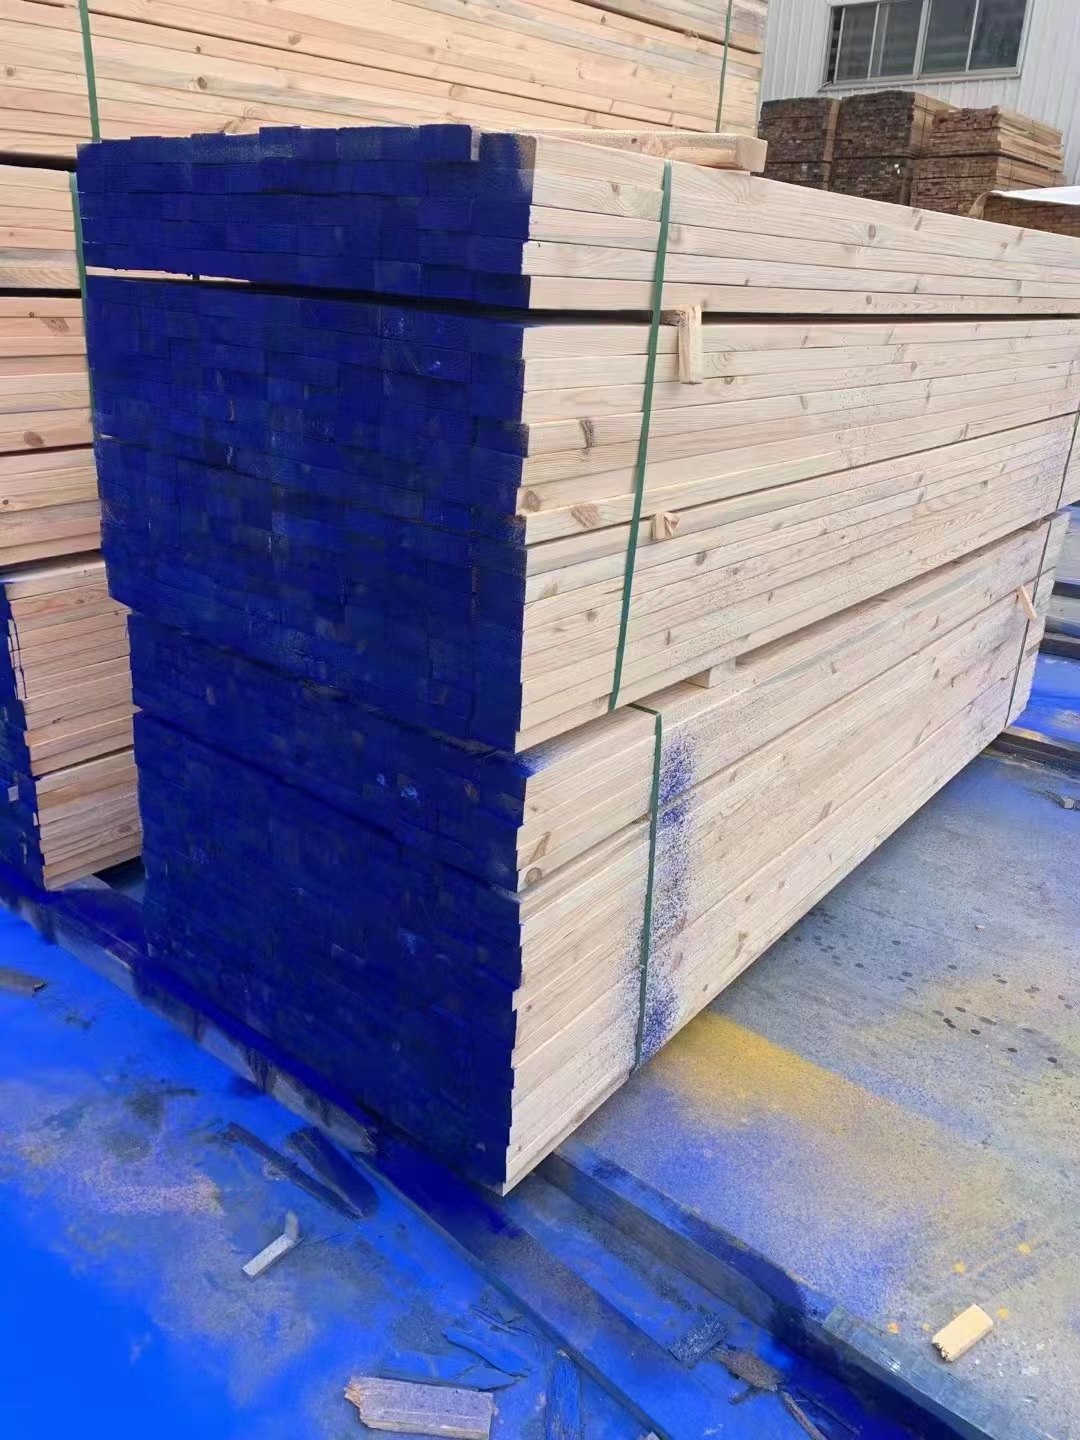 2x4x16 pine wood lumber